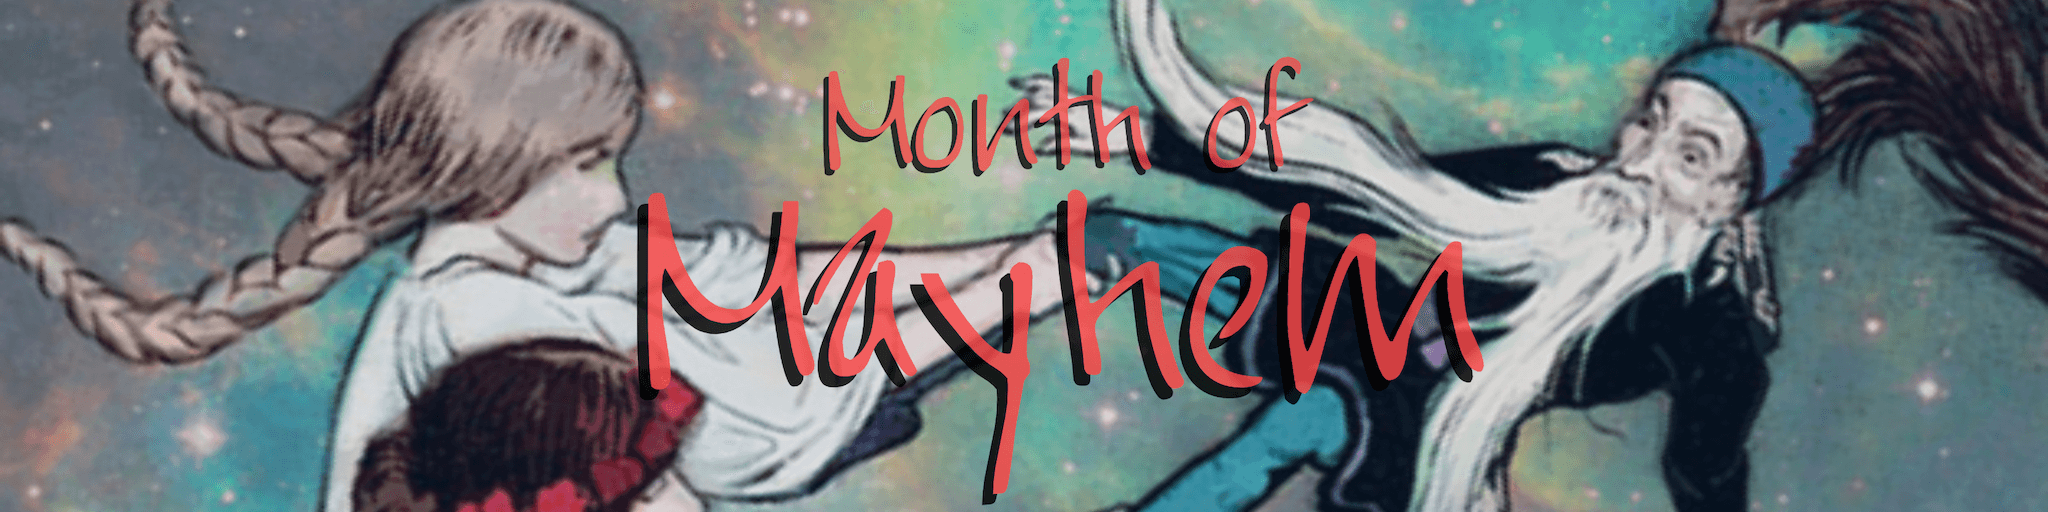 The Month of Mayhem